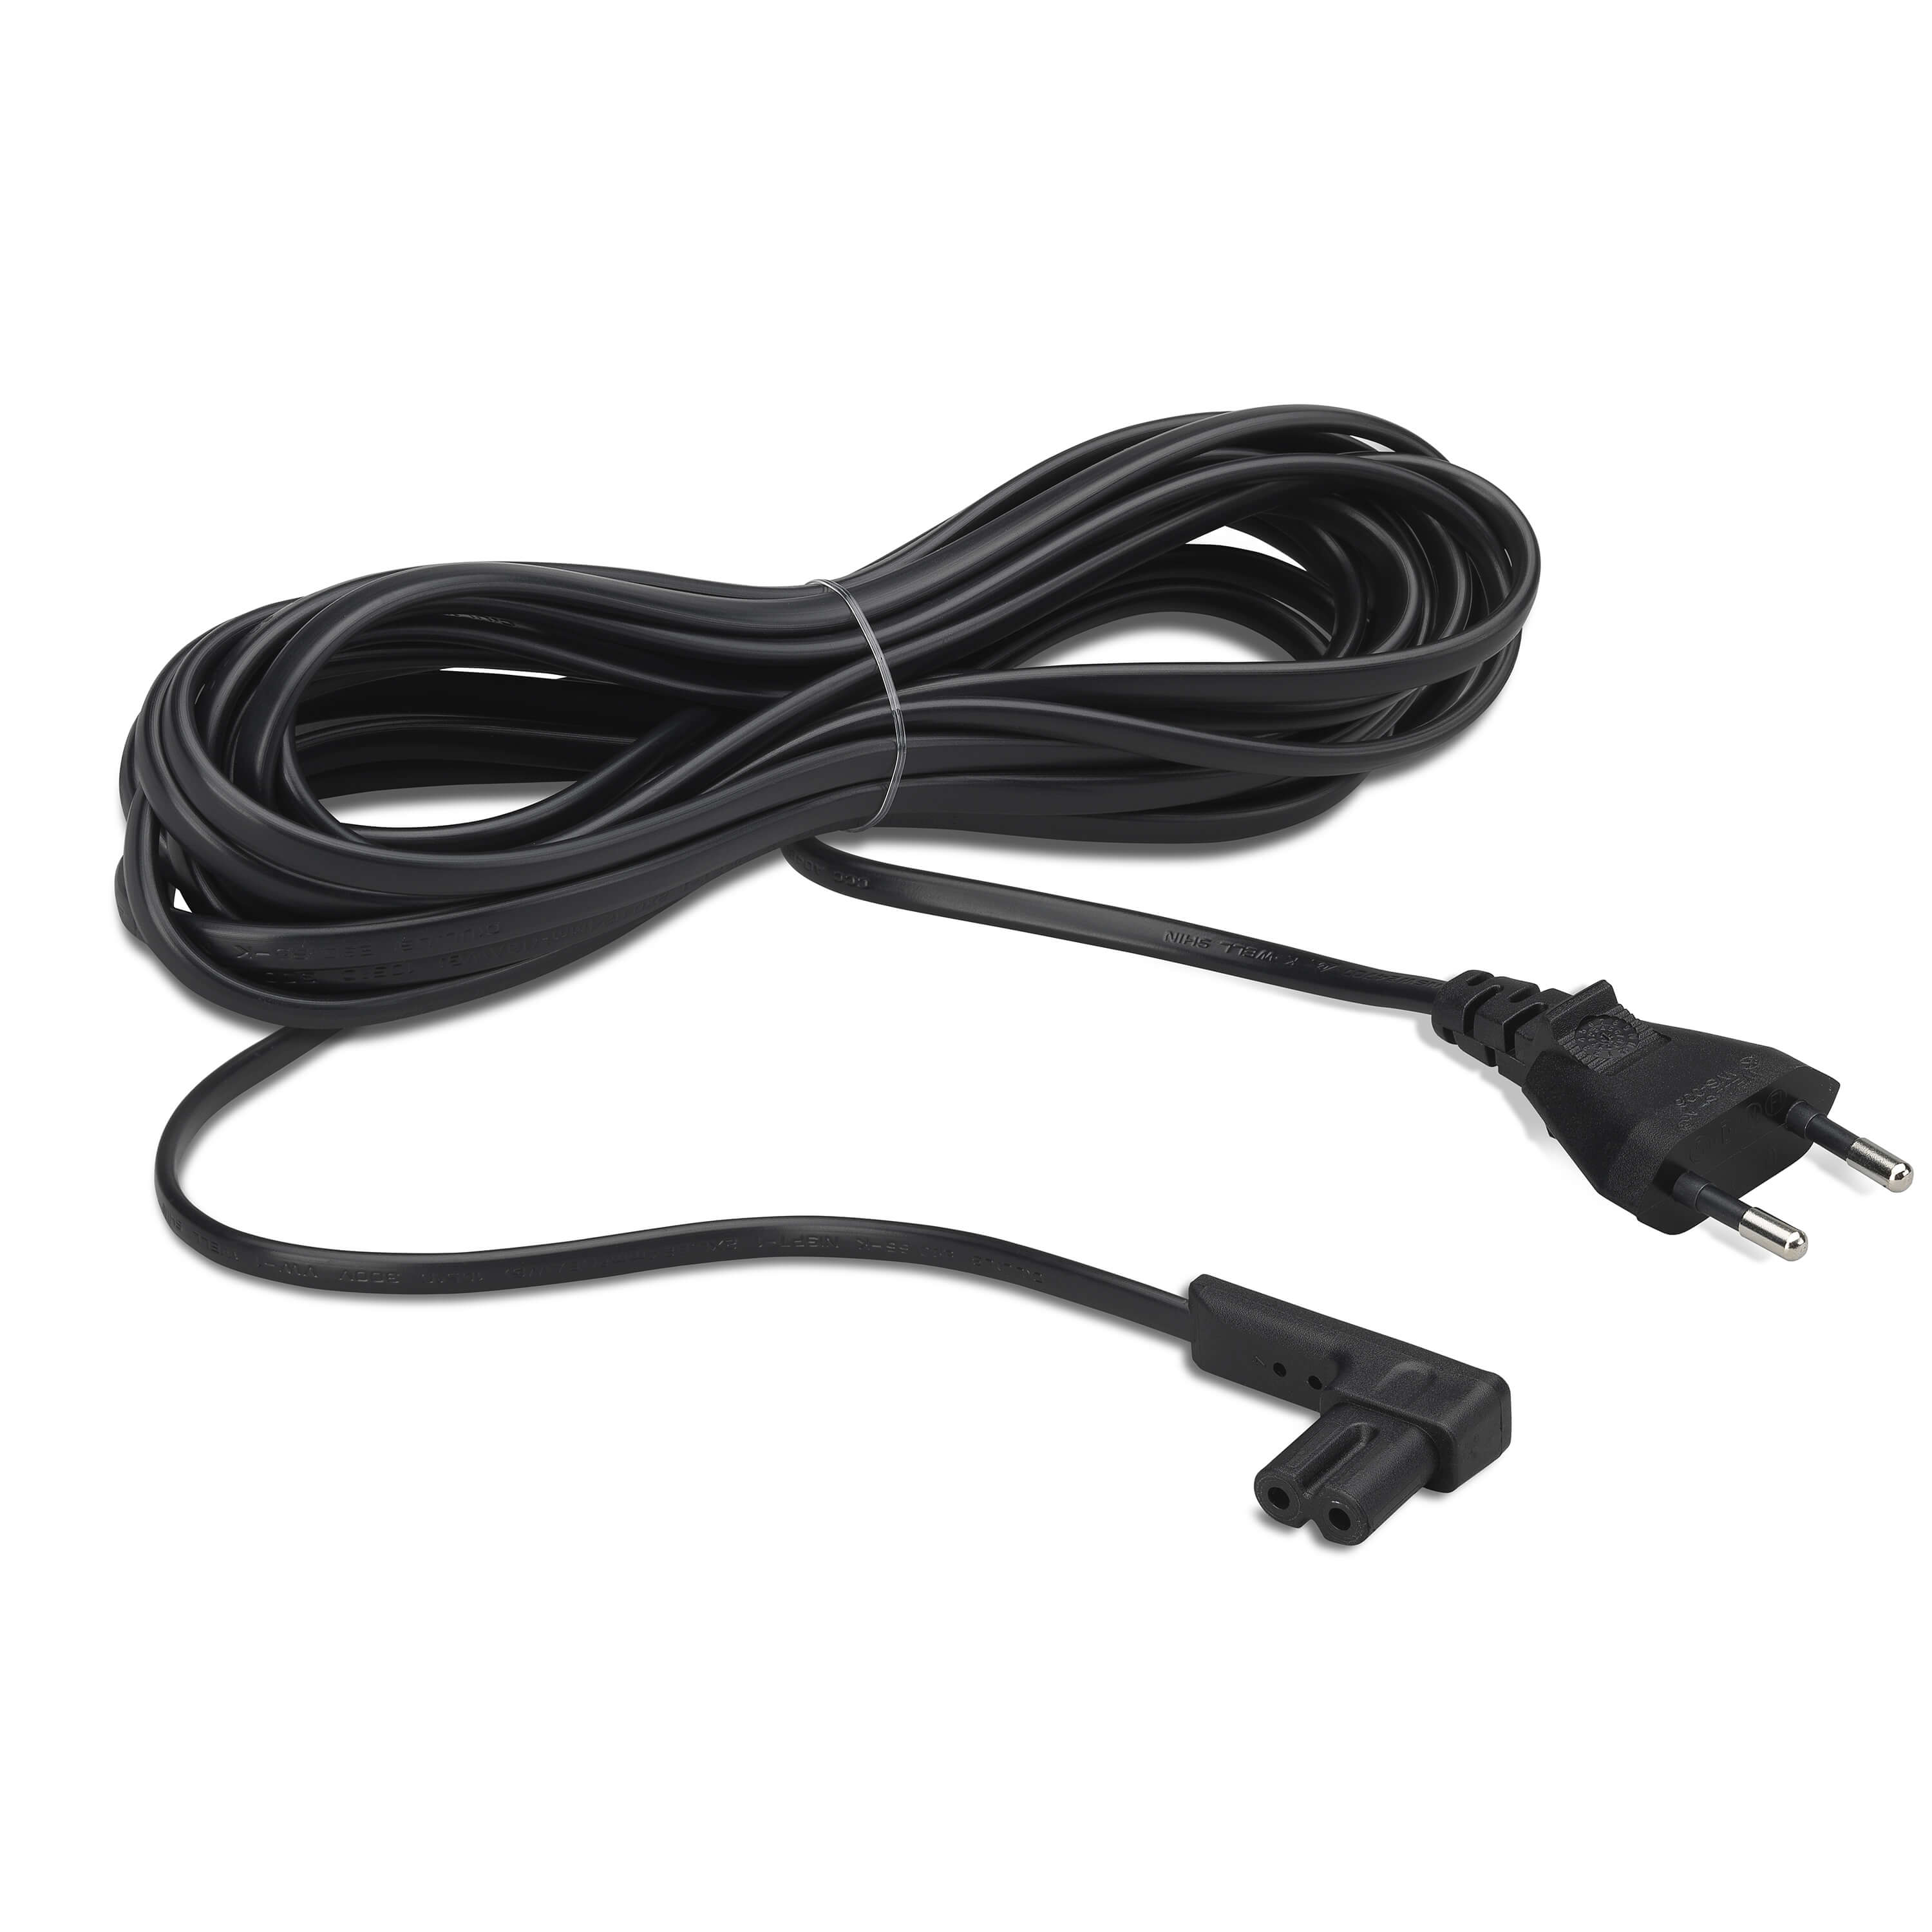 FLEXSON 5M Power Cable for Sonos One/Play:1 EU - Black Single